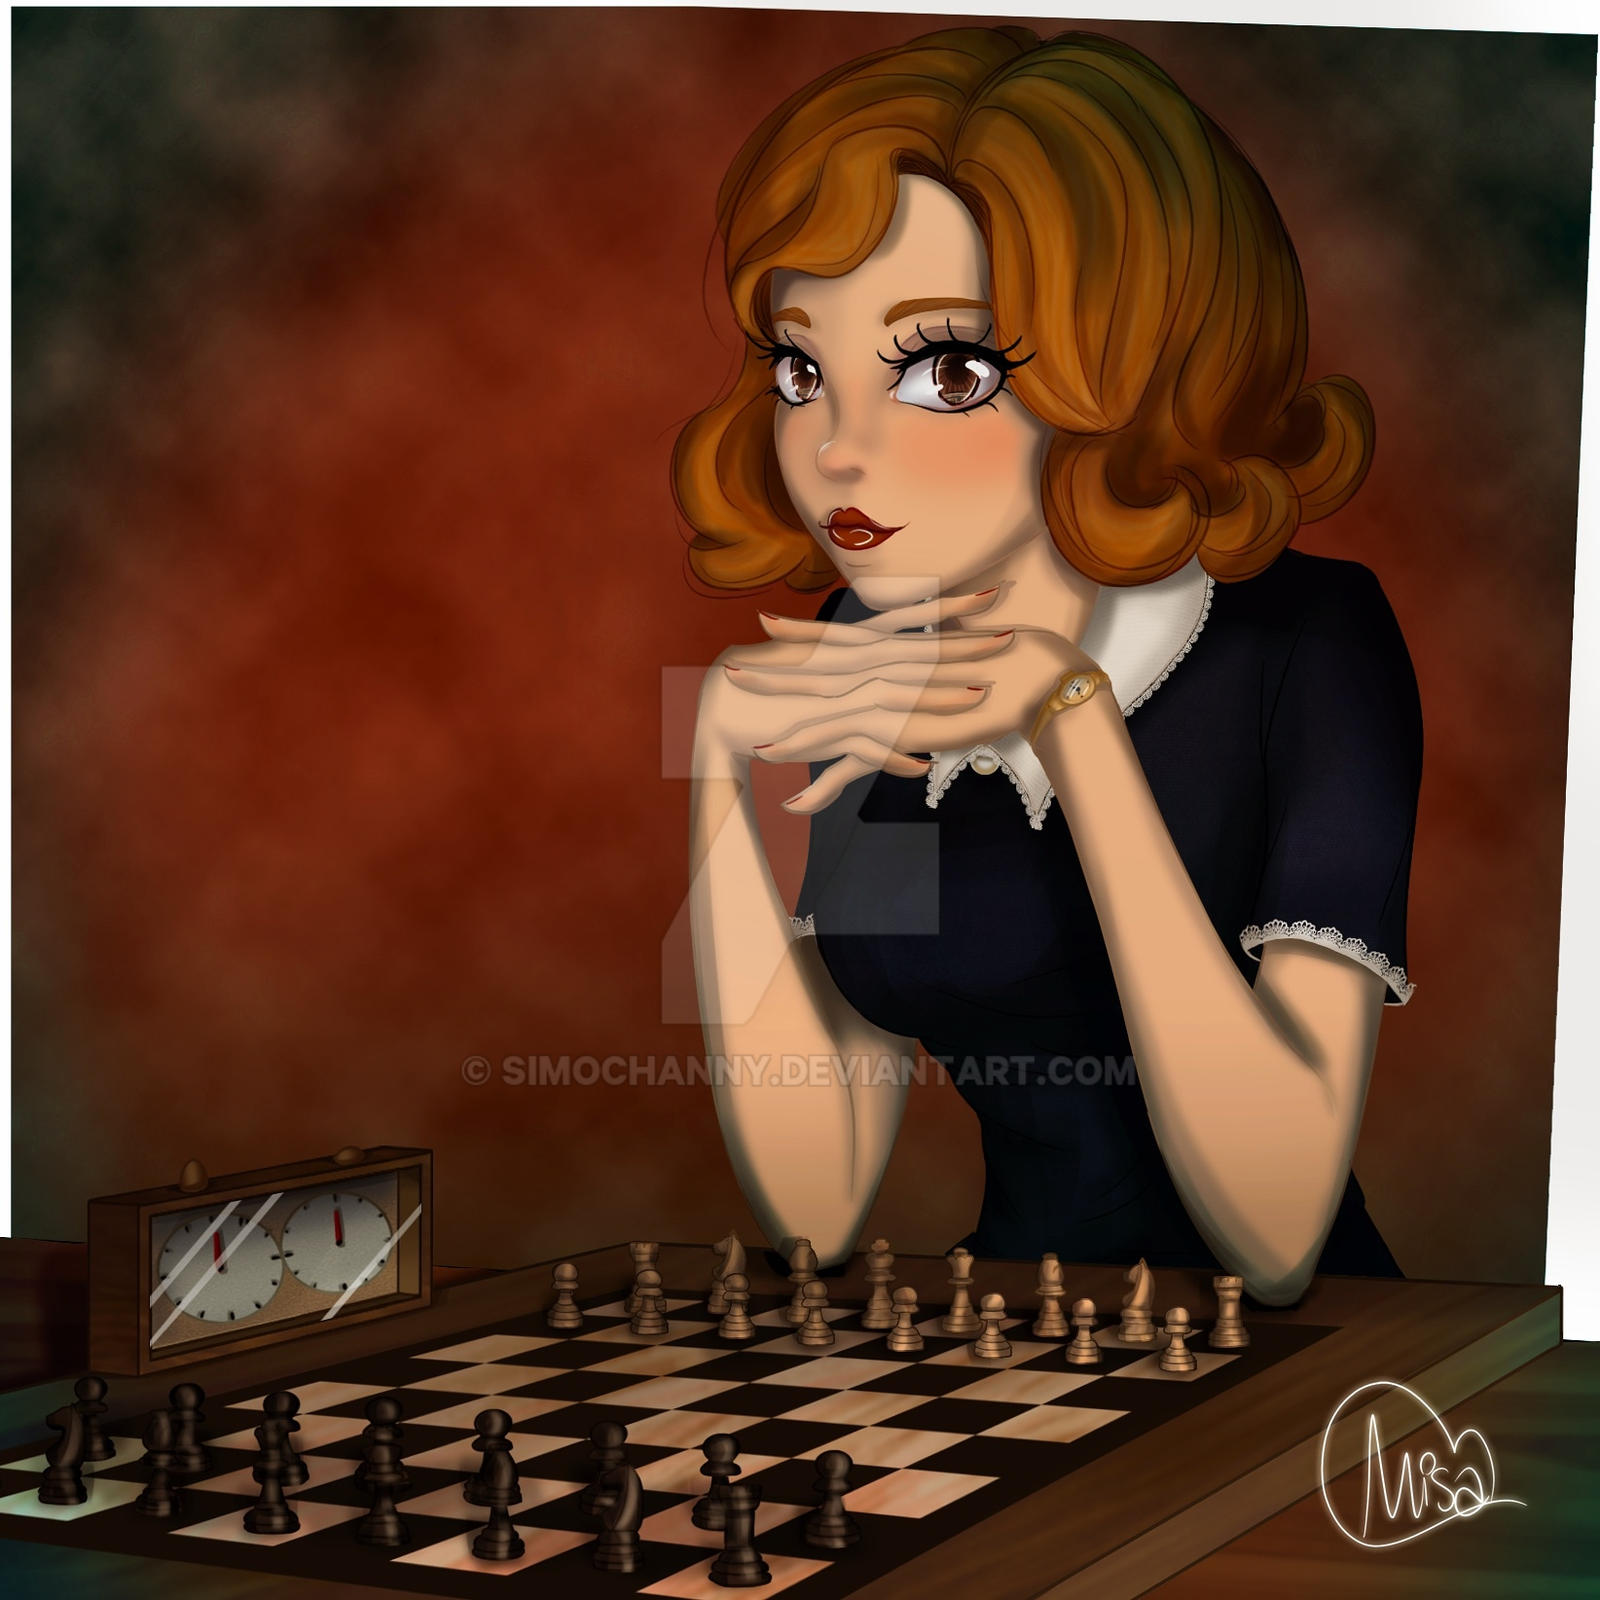 Beth Harmon - Chess Queen 